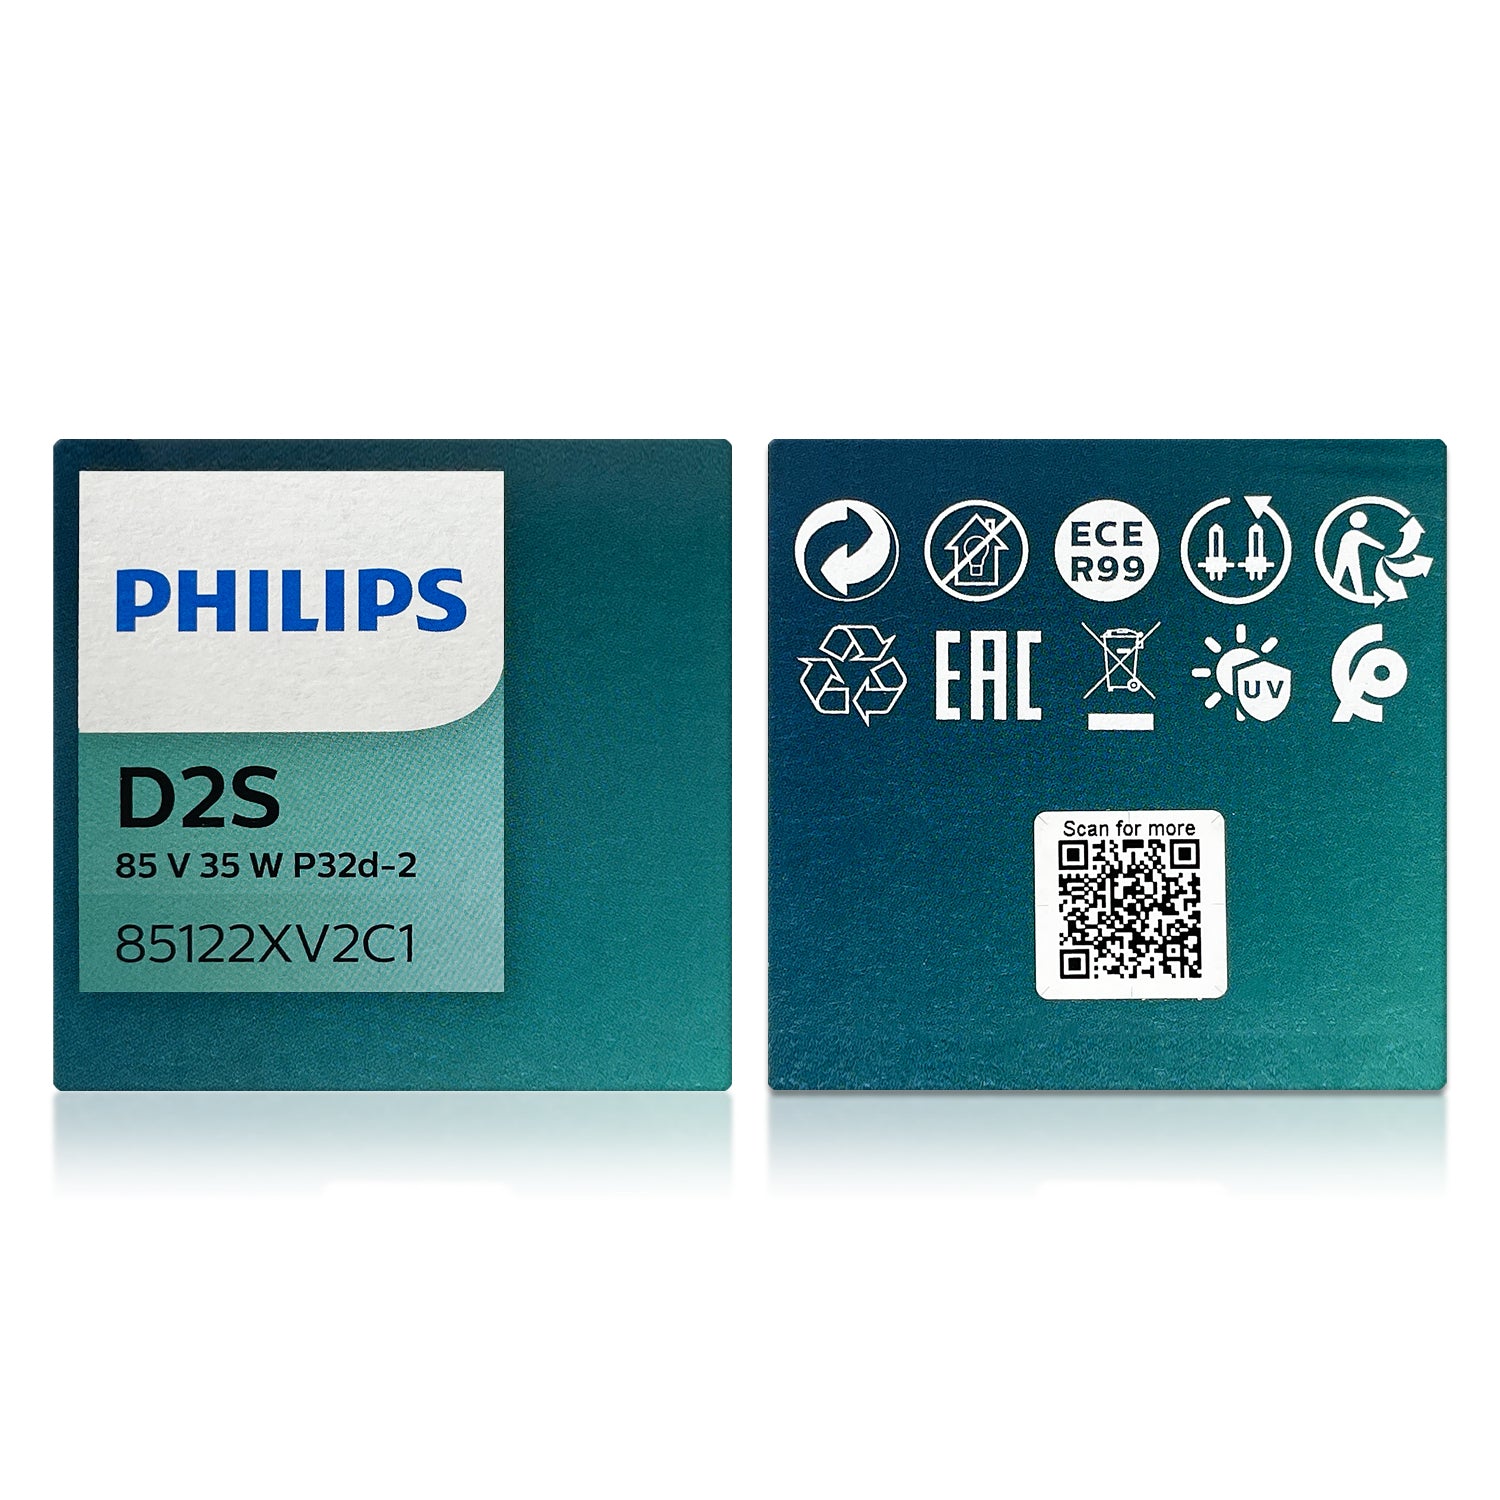 Philips Xenon D2S Muy potente Philips XtremeVision GEN2